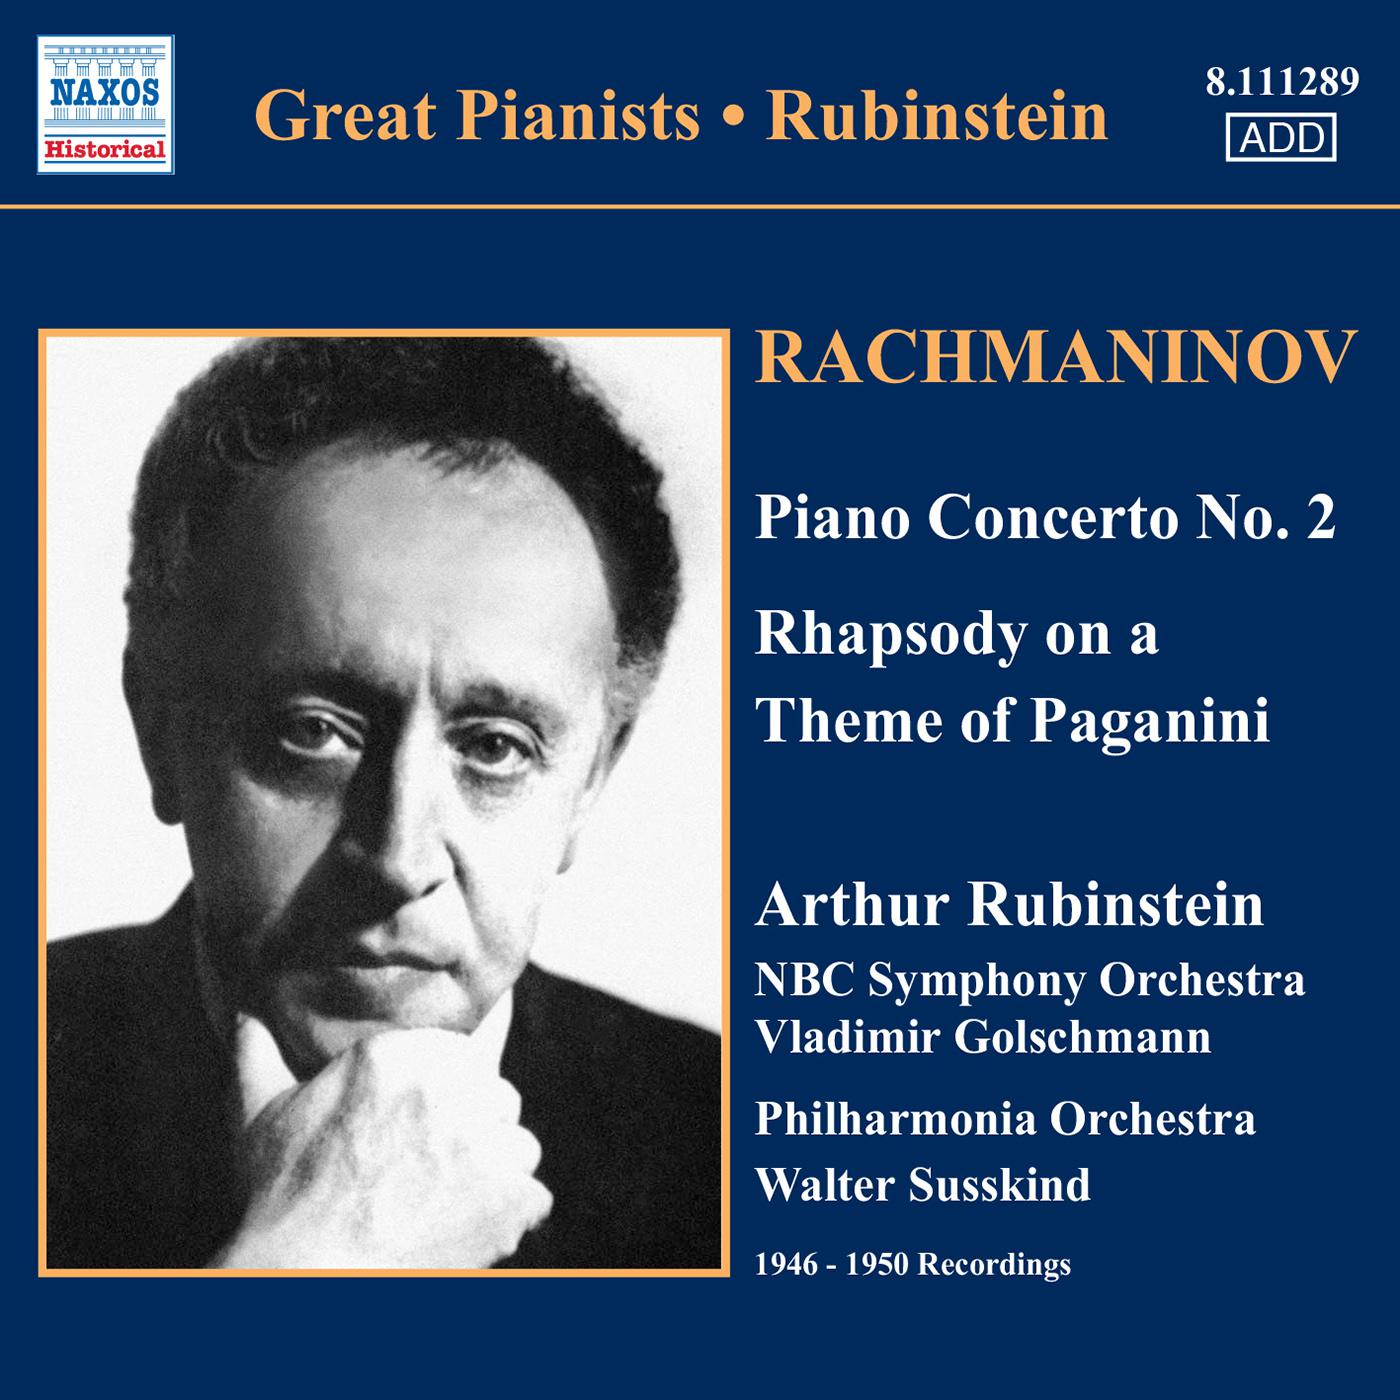 RACHMANINOV: Piano Concerto No. 2 / Rhapsody on a Theme of Paganini (Rubinstein) (1946-1950)